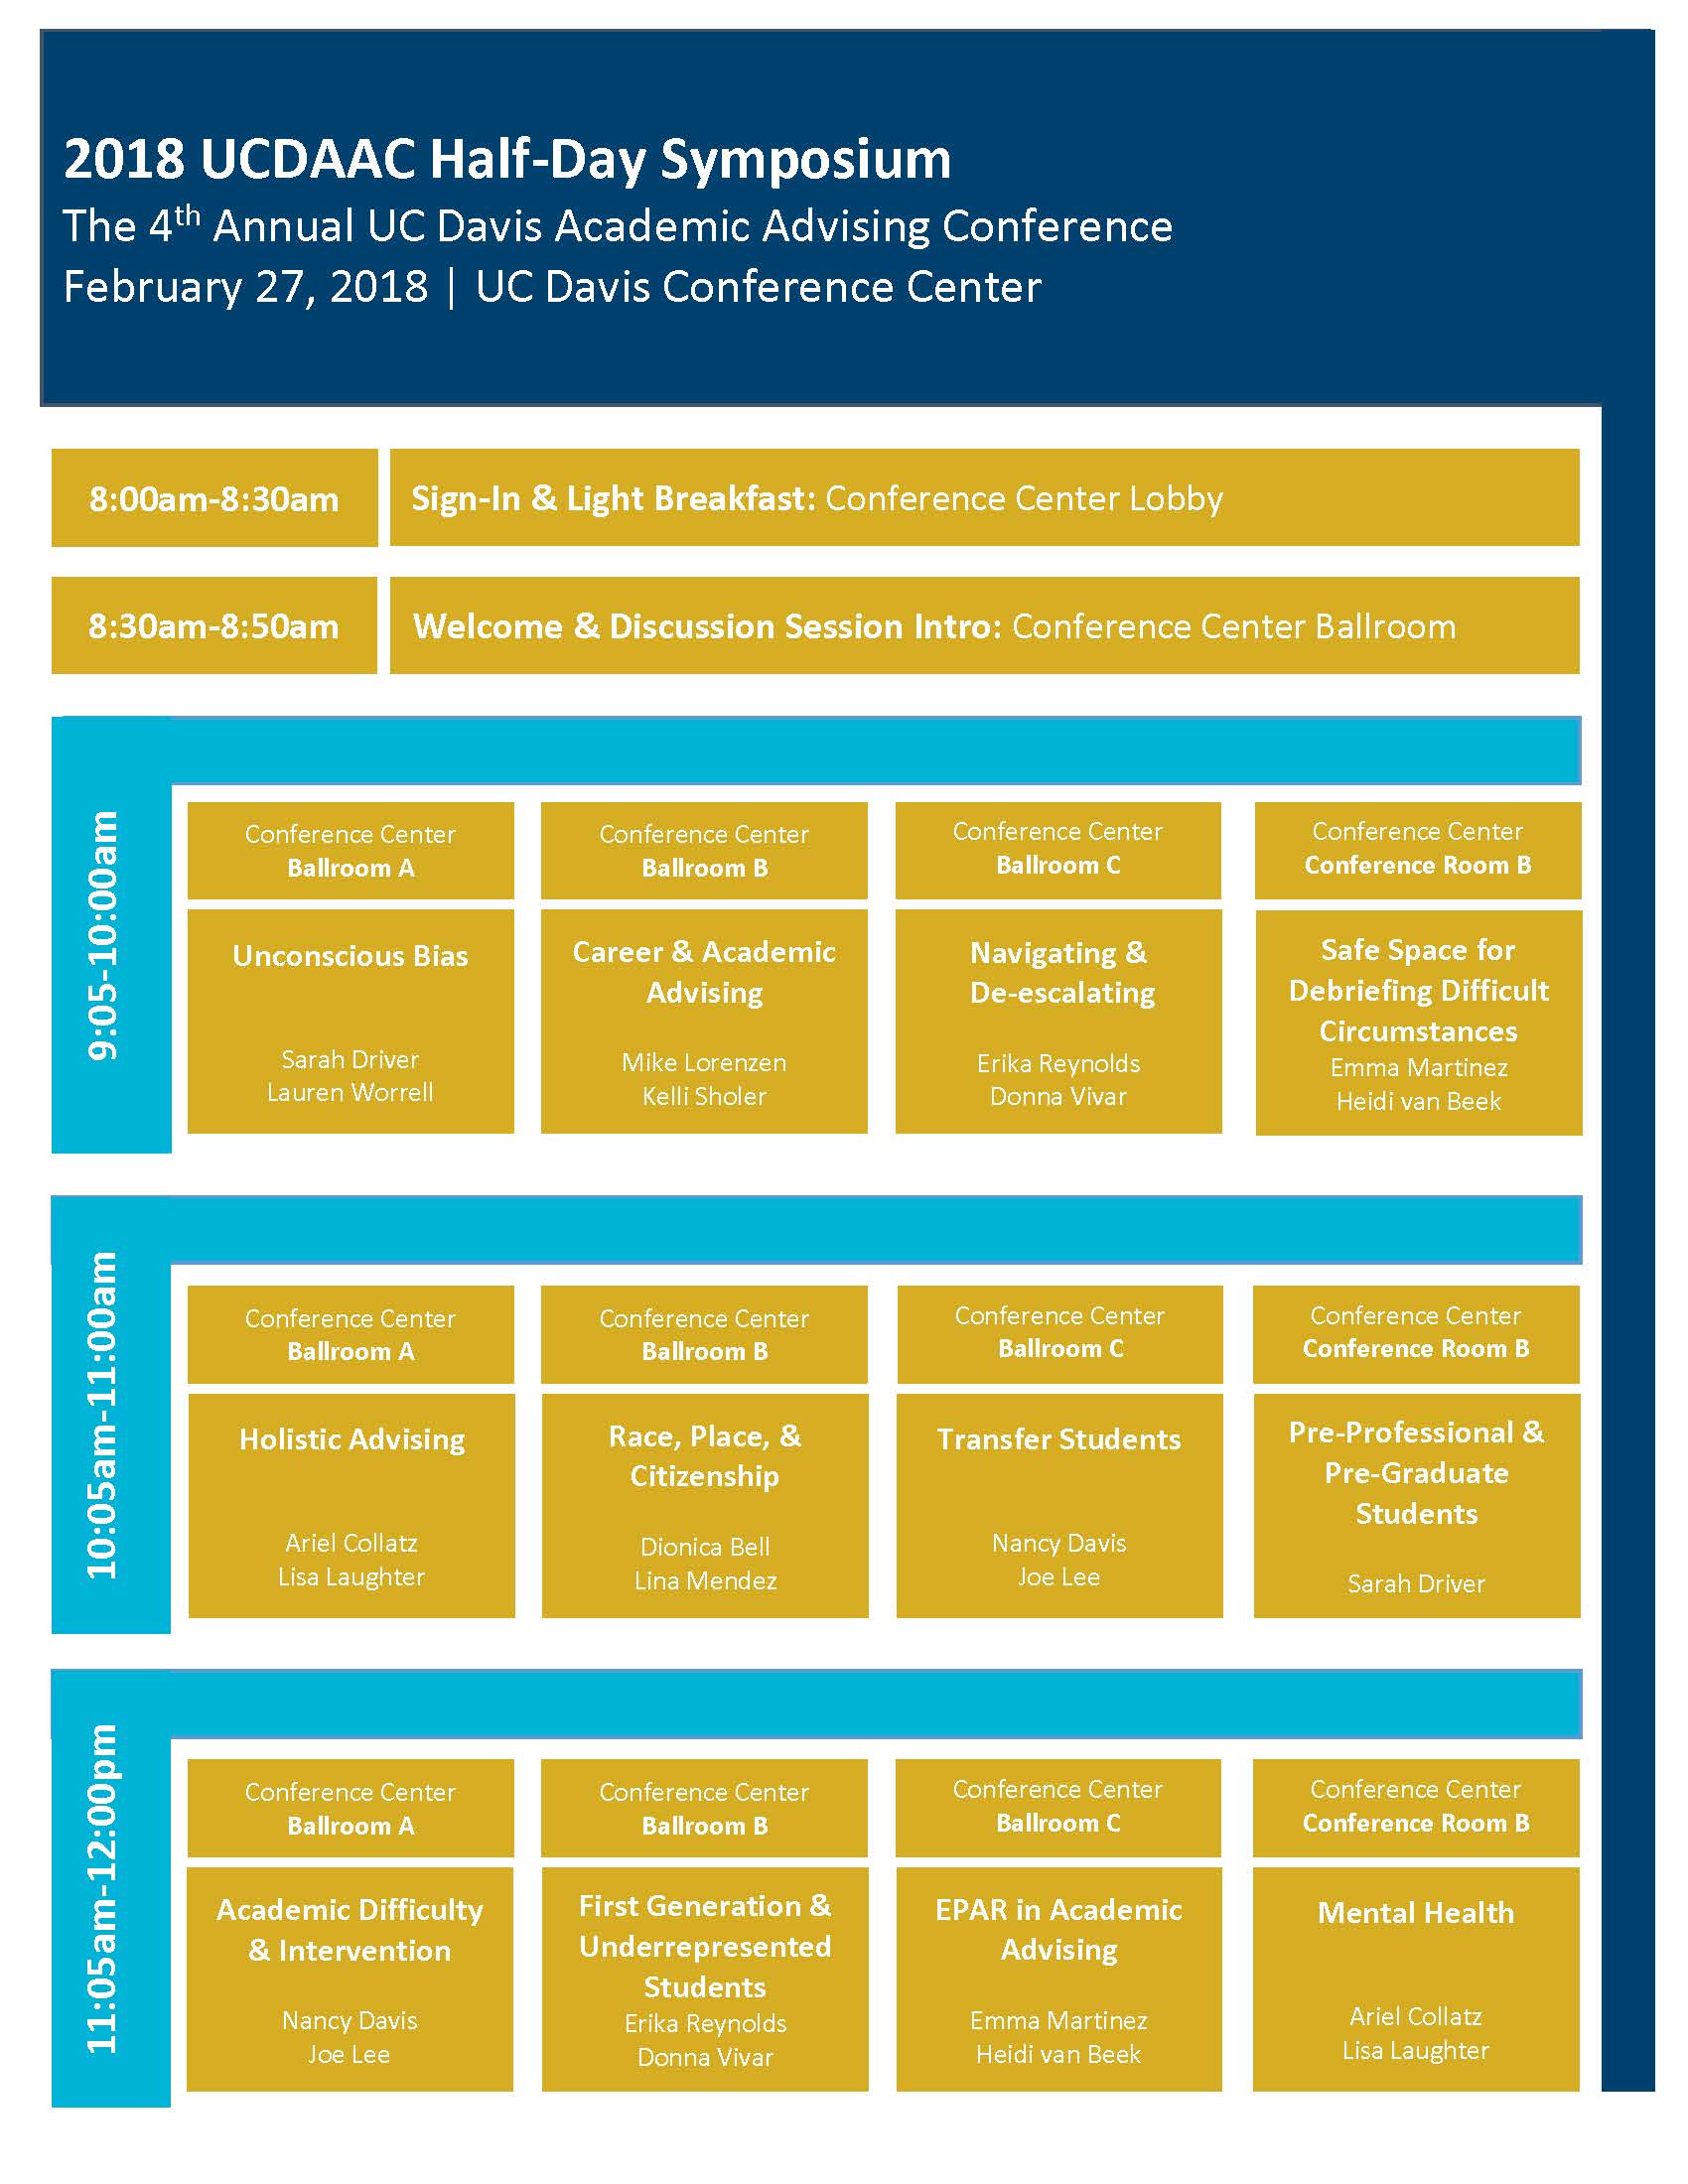 2018 UCDAAC Schedule At-A-Glance